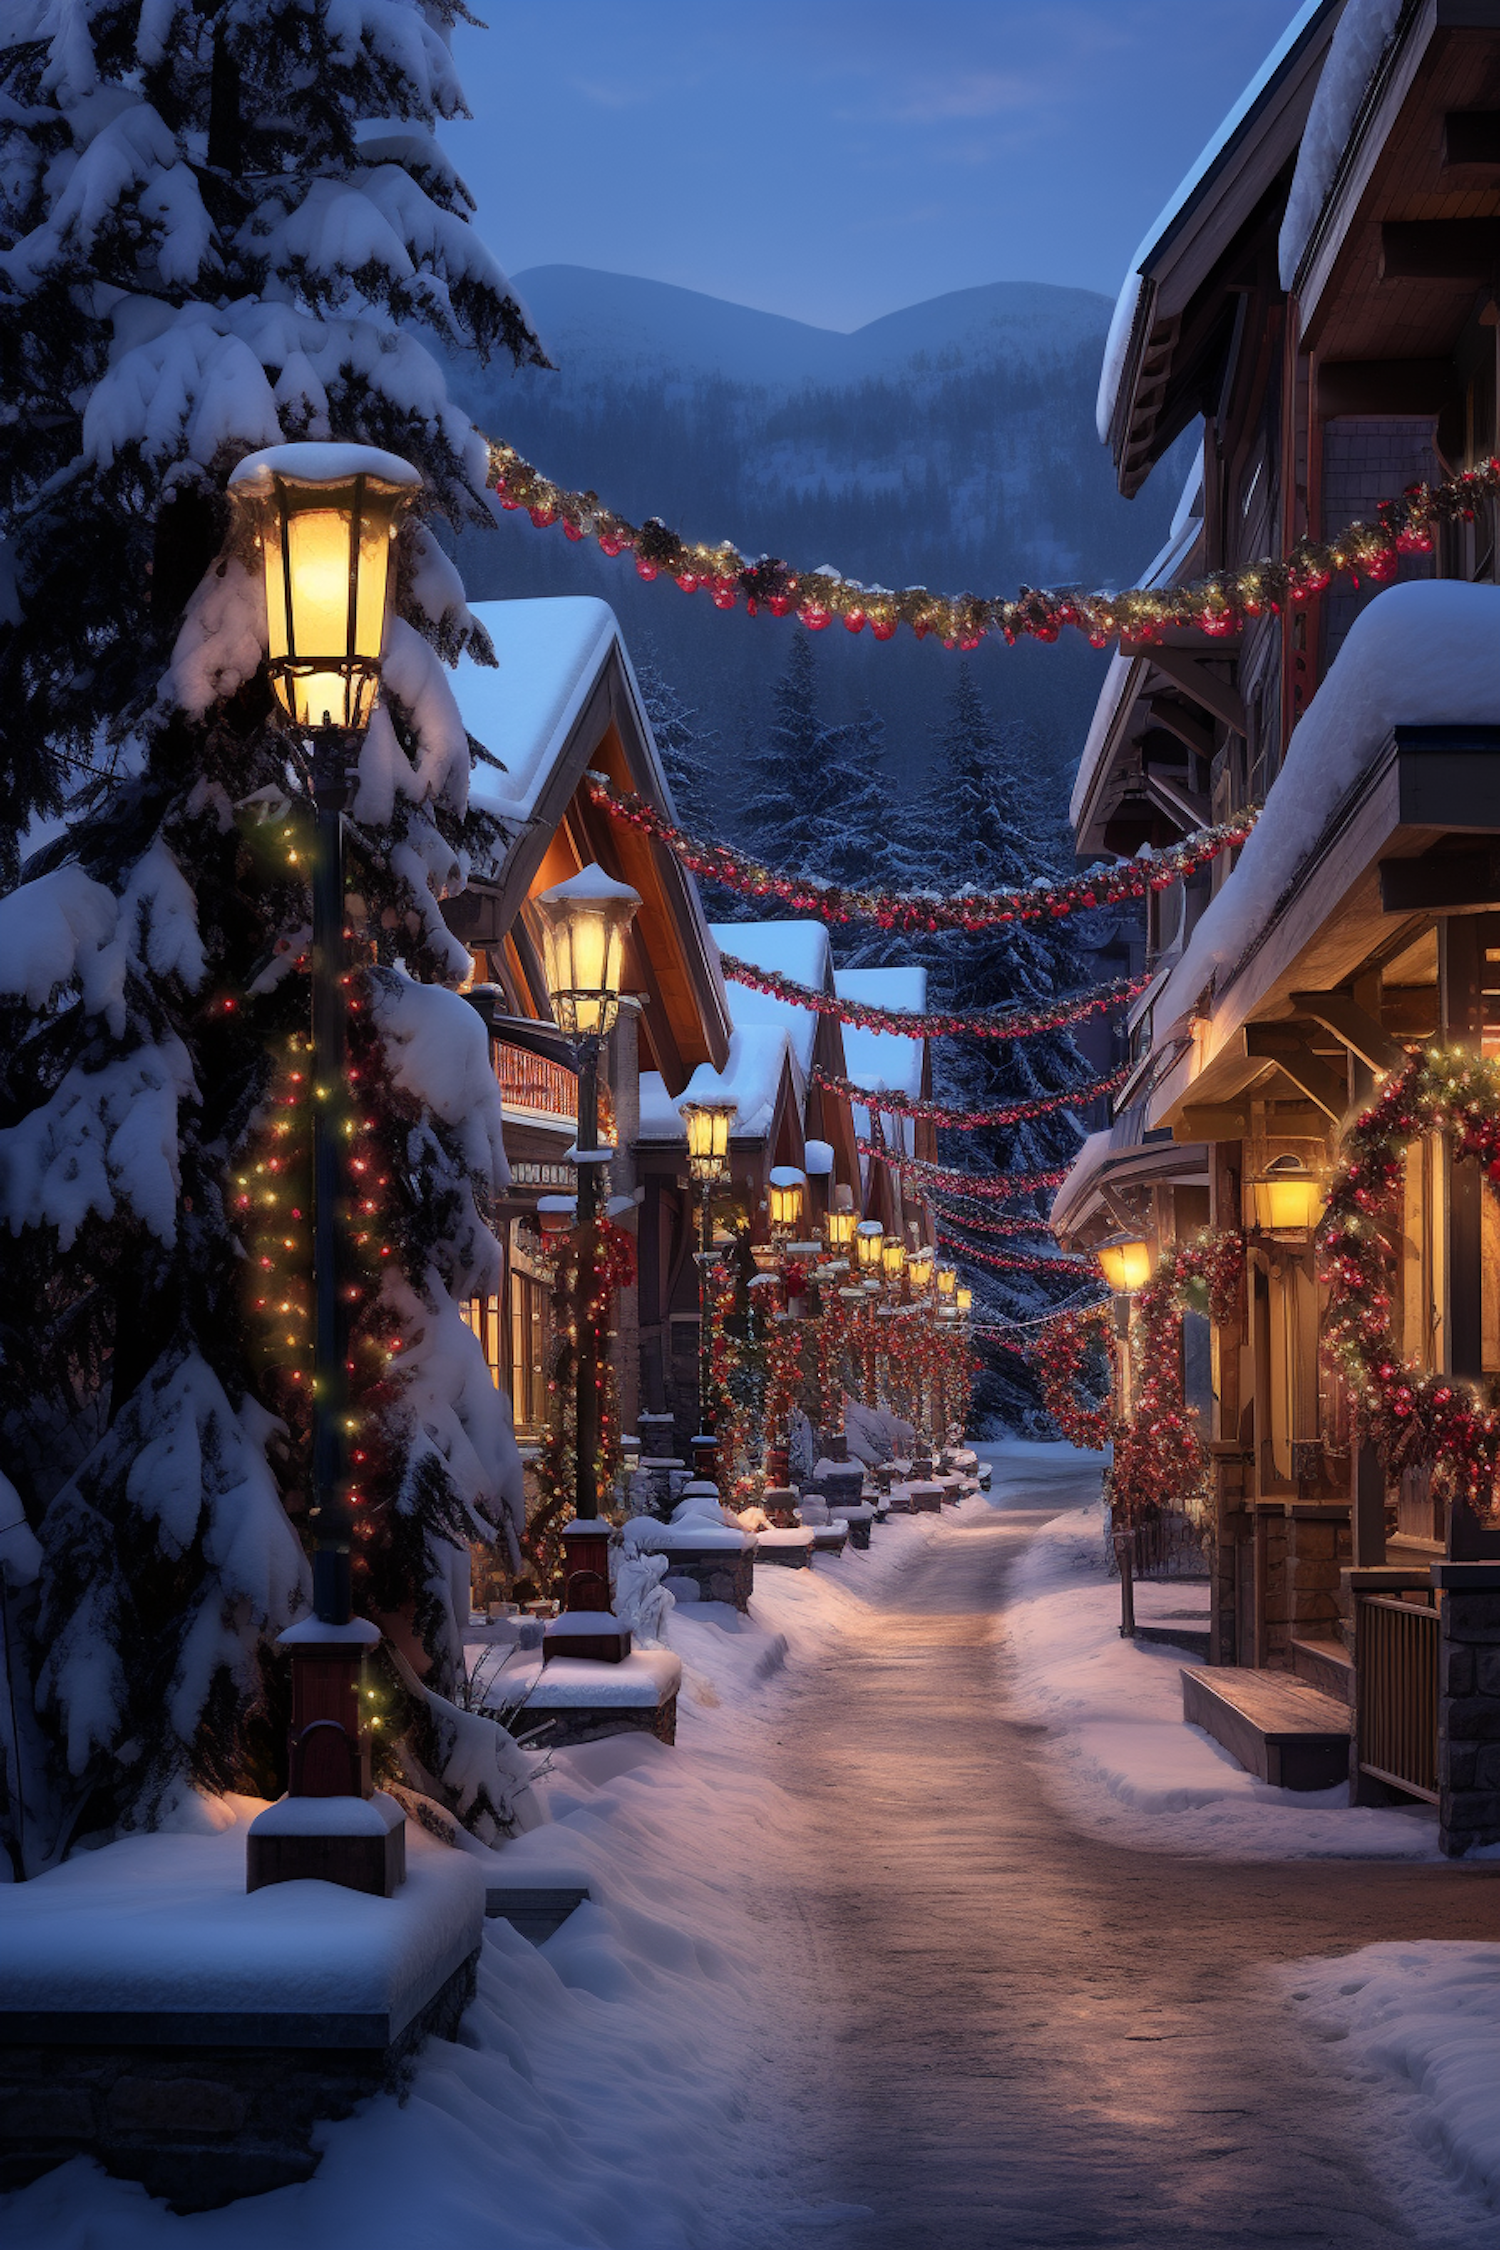 Vintage Lantern-lit Snowy Evening on a Mountain Village Street